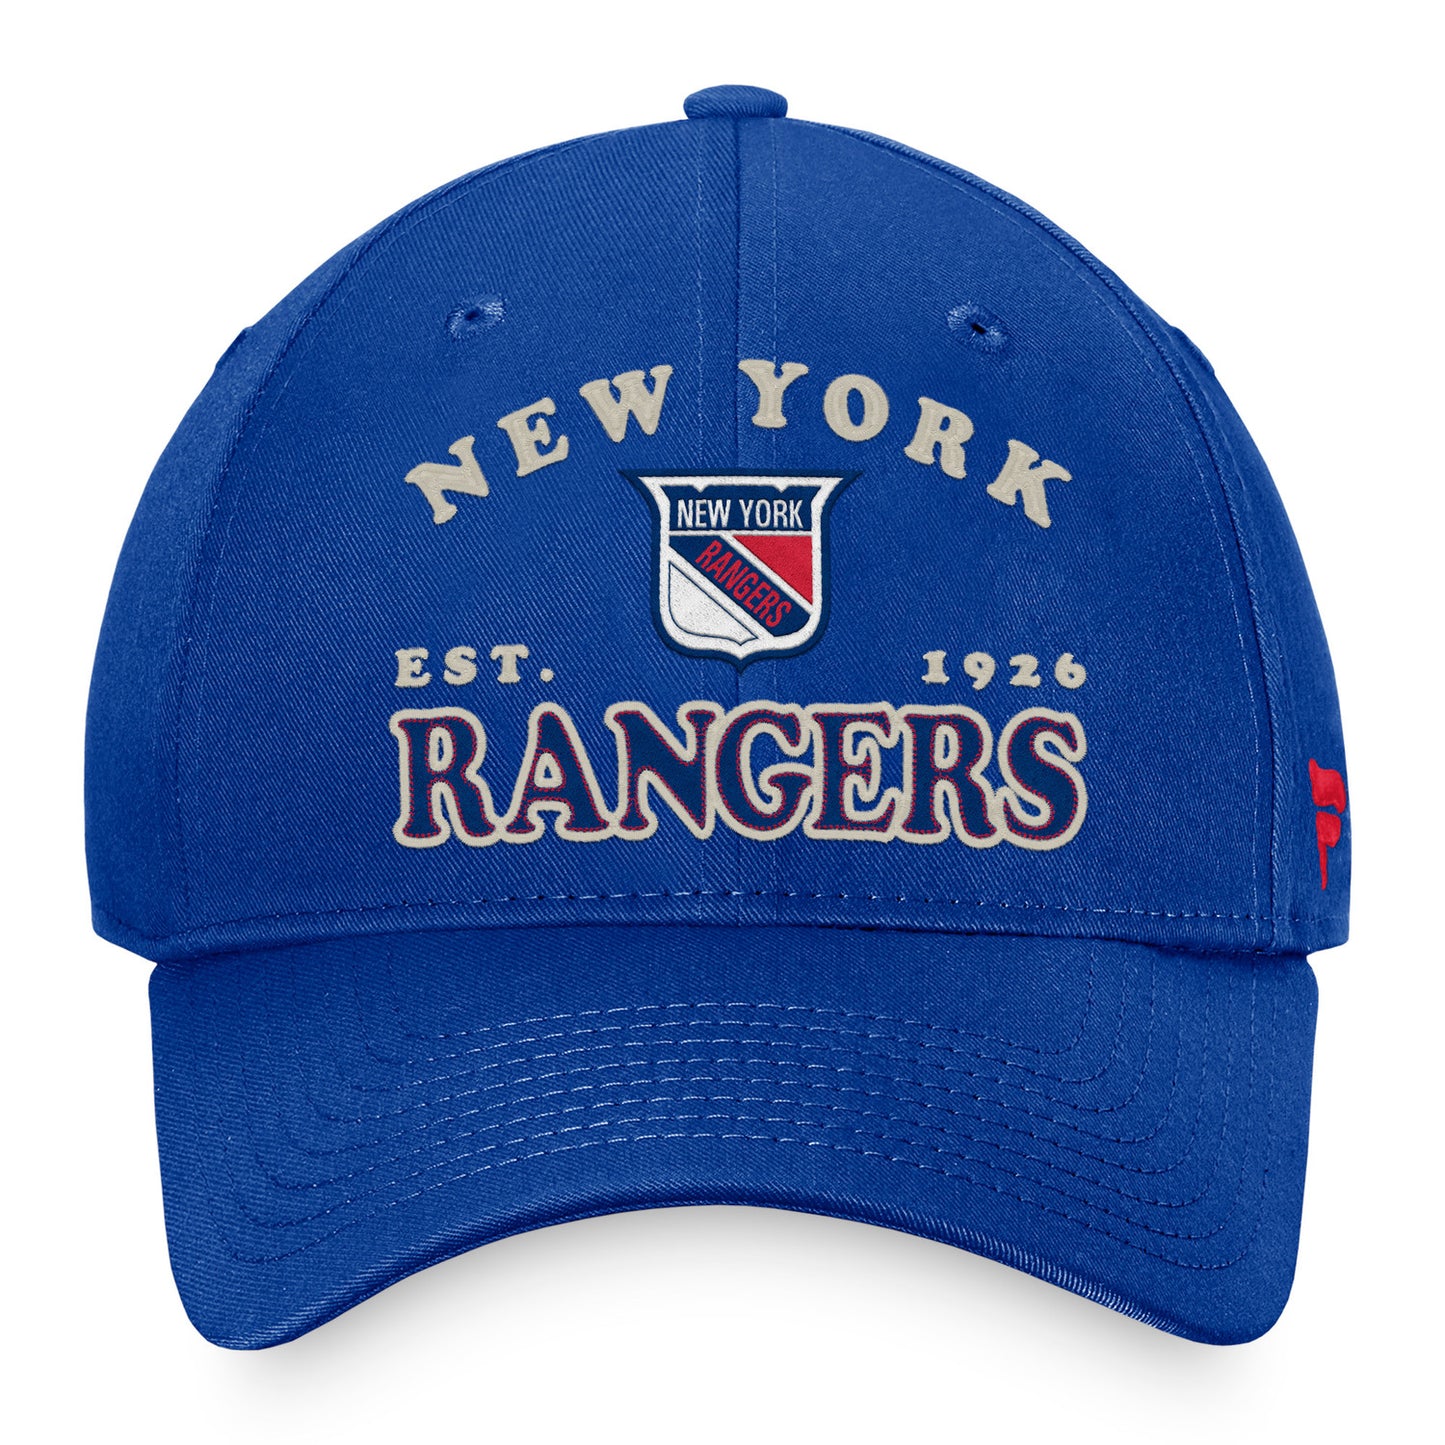 Fanatics Rangers Heritage Adjustable Hat - Front View